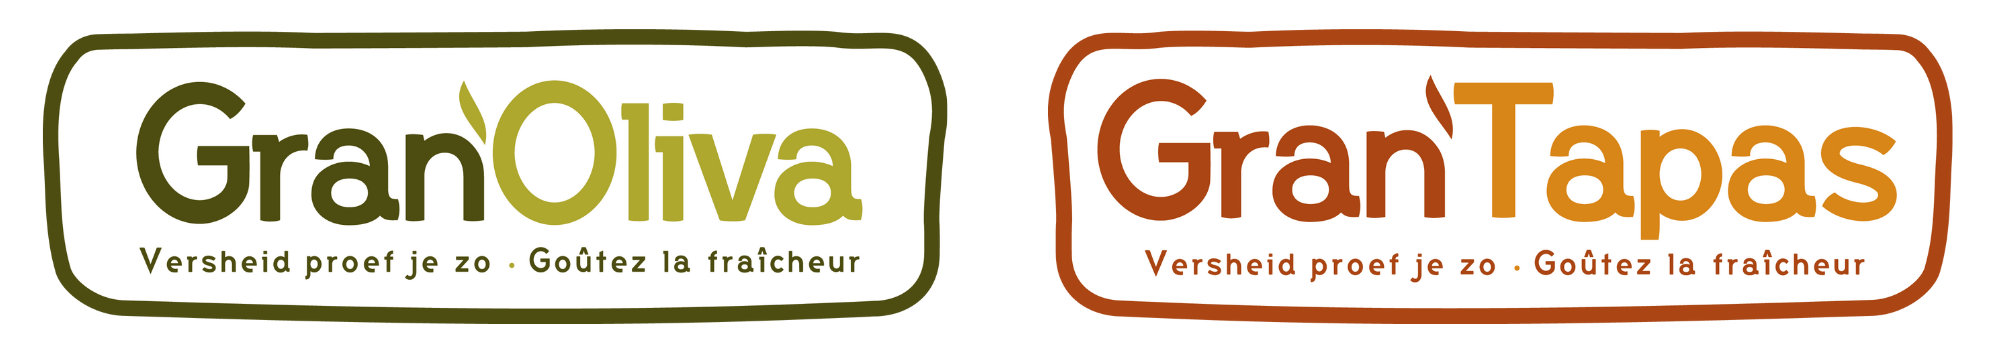 Gran'Oliva - Gran'Tapas logo